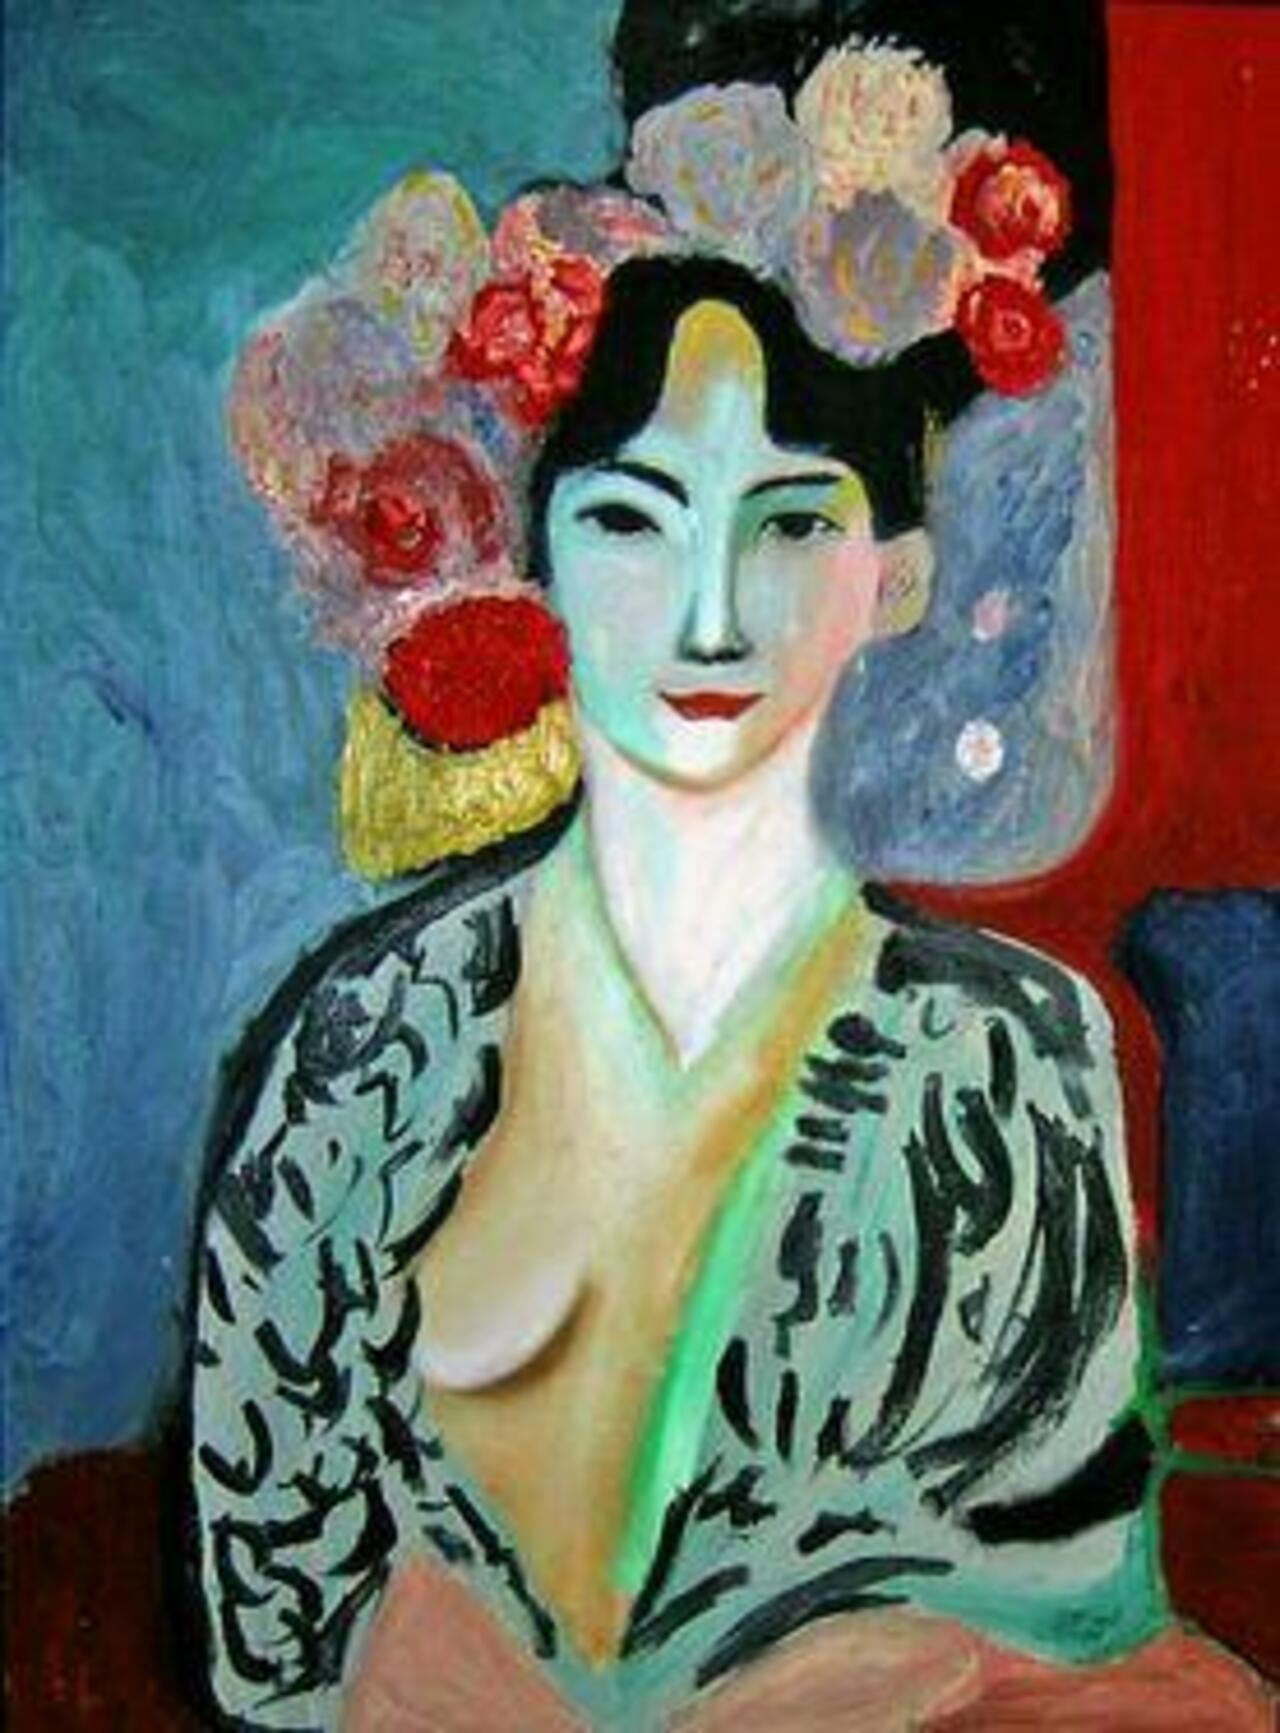 Flores - Matisse #art #painting http://t.co/mkoRgcsRcI